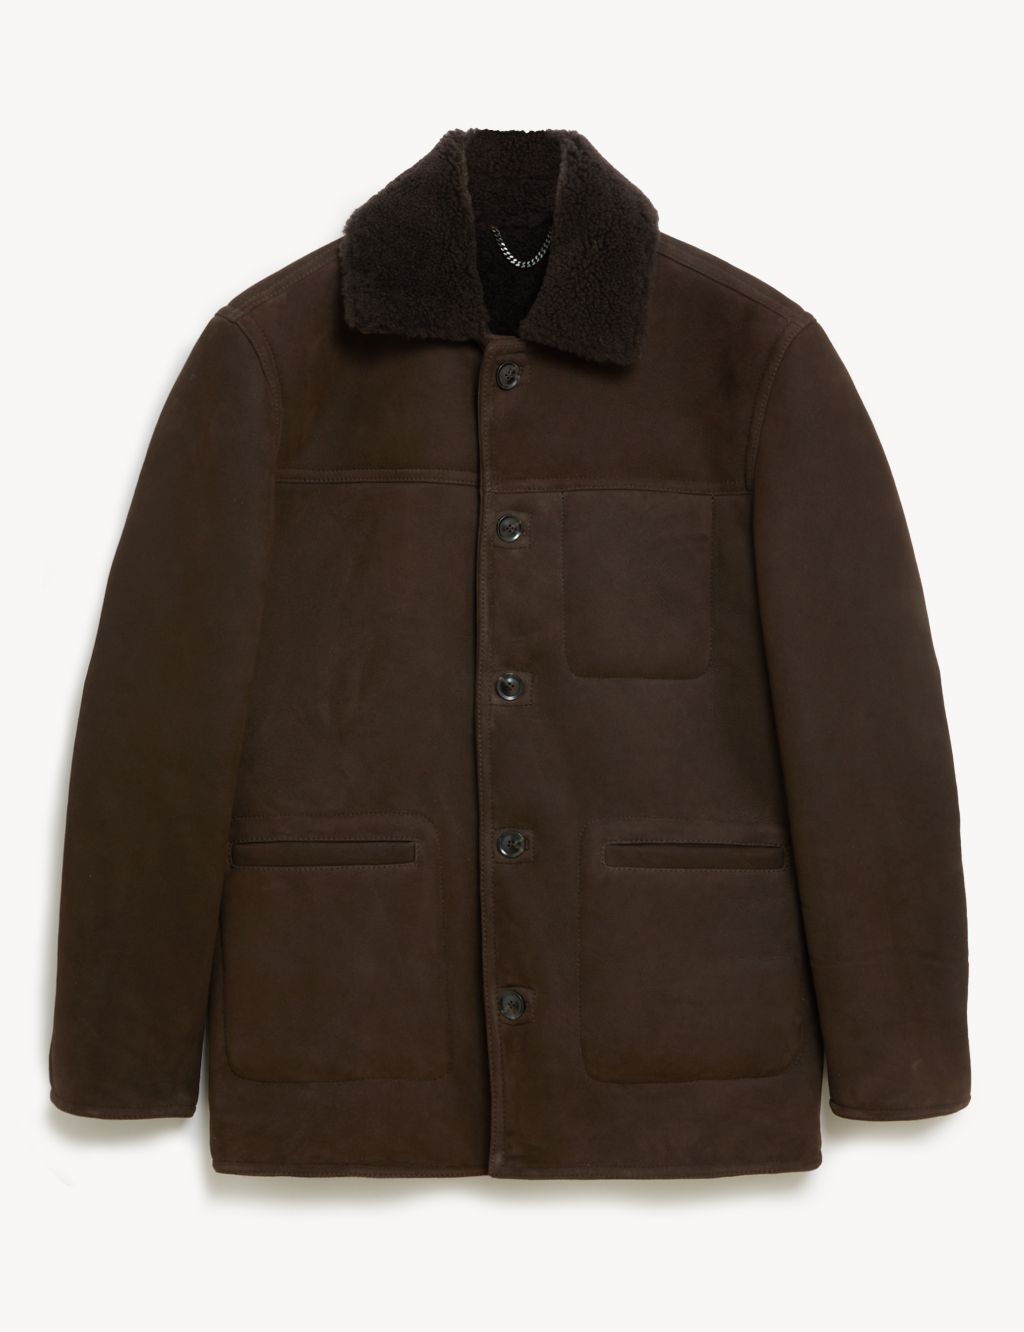 Luxurious Leather Shearling Jacket image 1